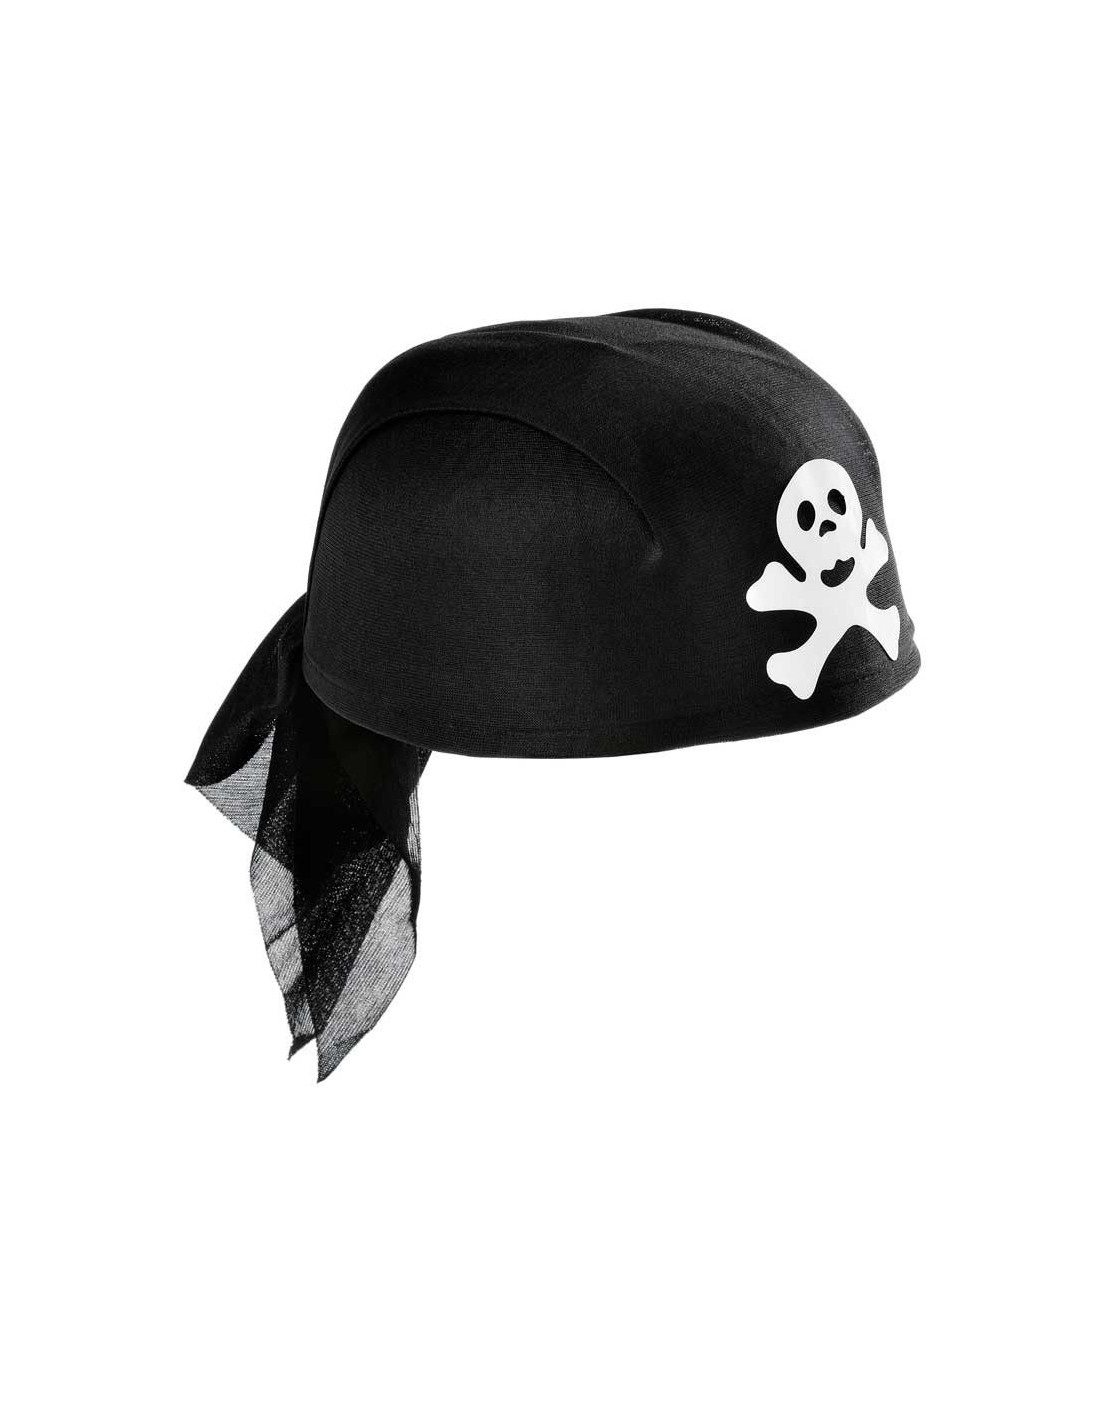 Casquete pirata con pañuelo - Comprar en Tienda Disfraces Bacanal